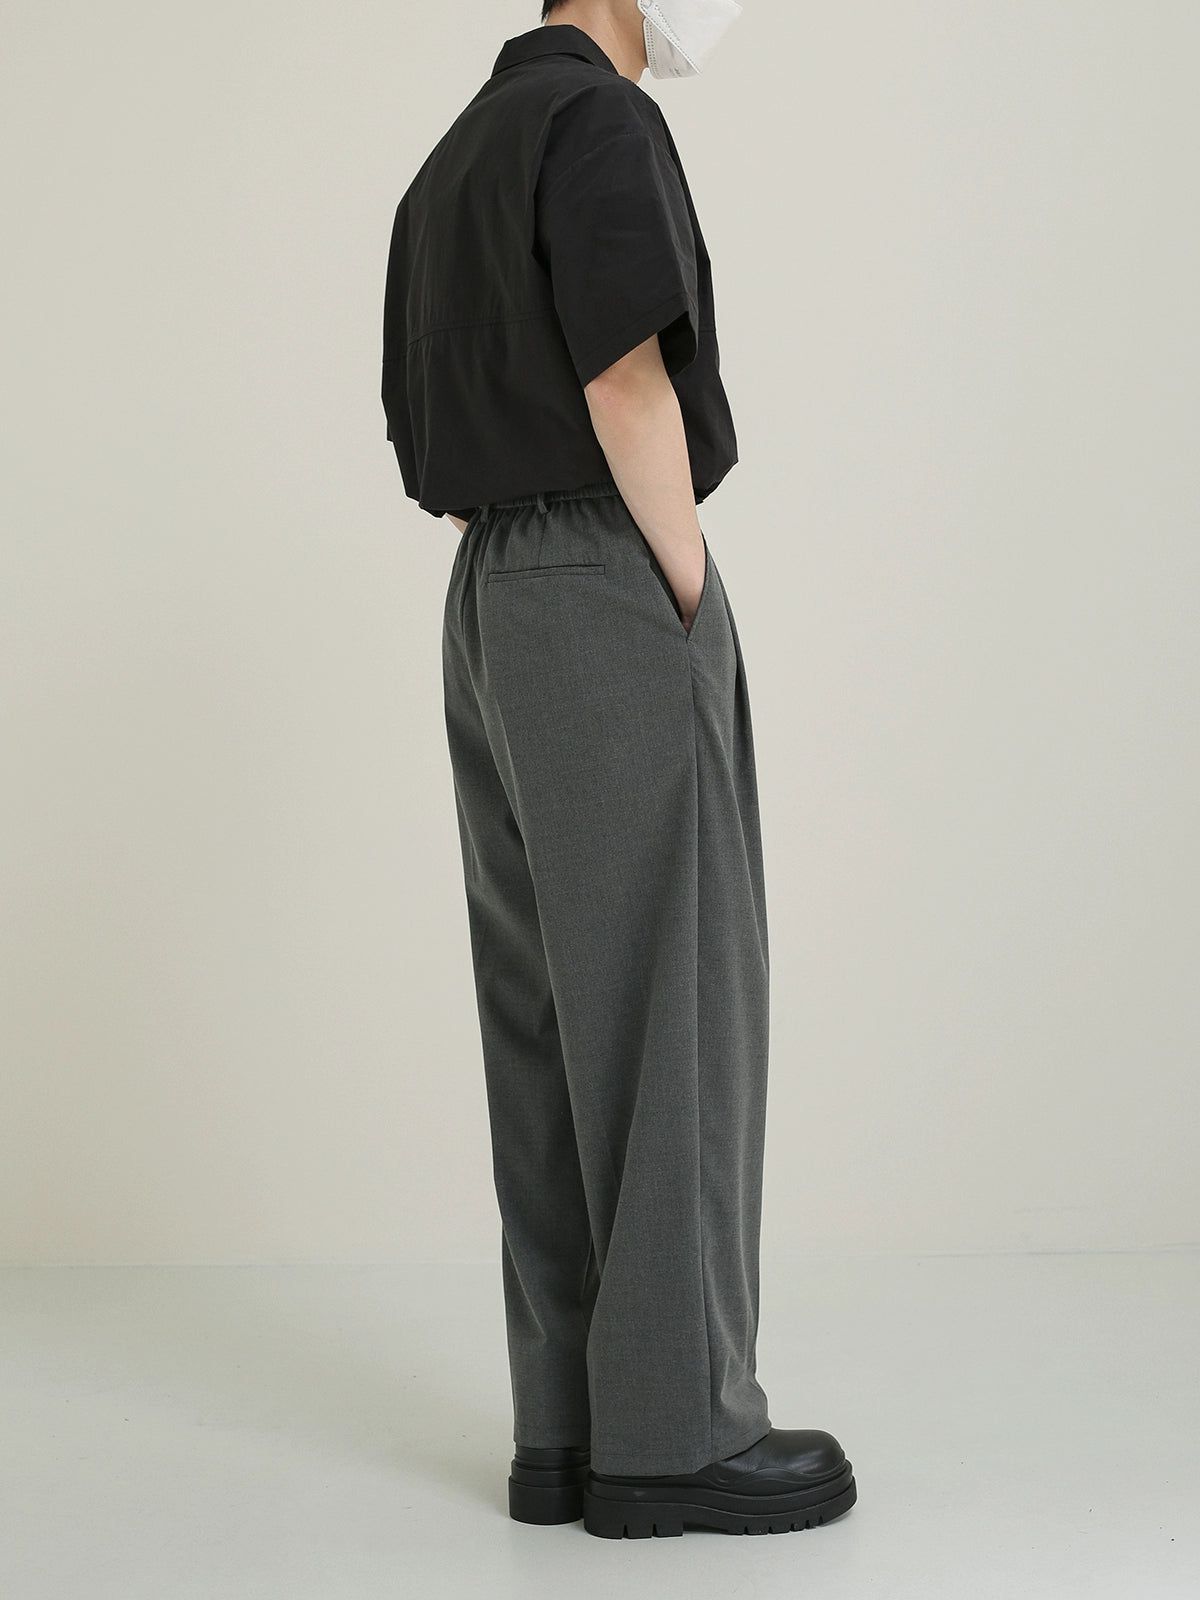 Zhou Irregular Pocket Collared Short Sleeve Shirt-korean-fashion-Shirt-Zhou's Closet-OH Garments